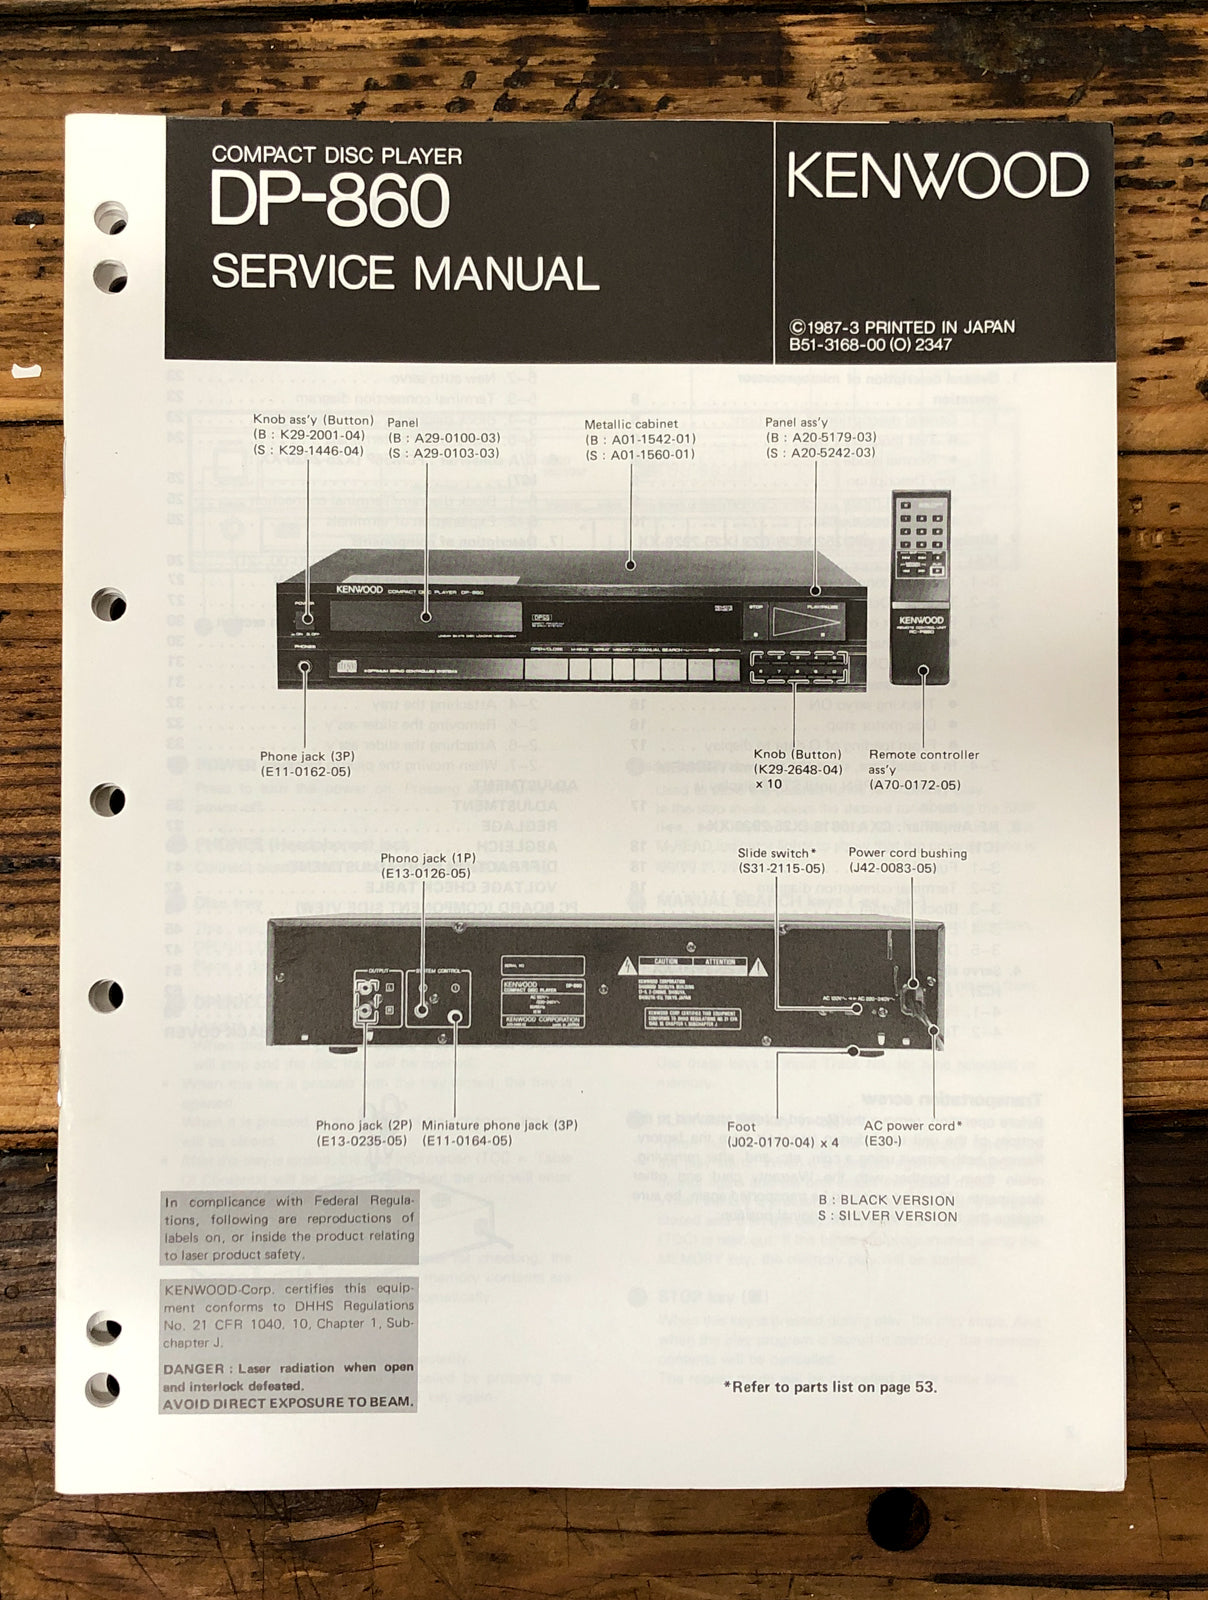 Kenwood DP-860 CD Player  Service Manual *Original*